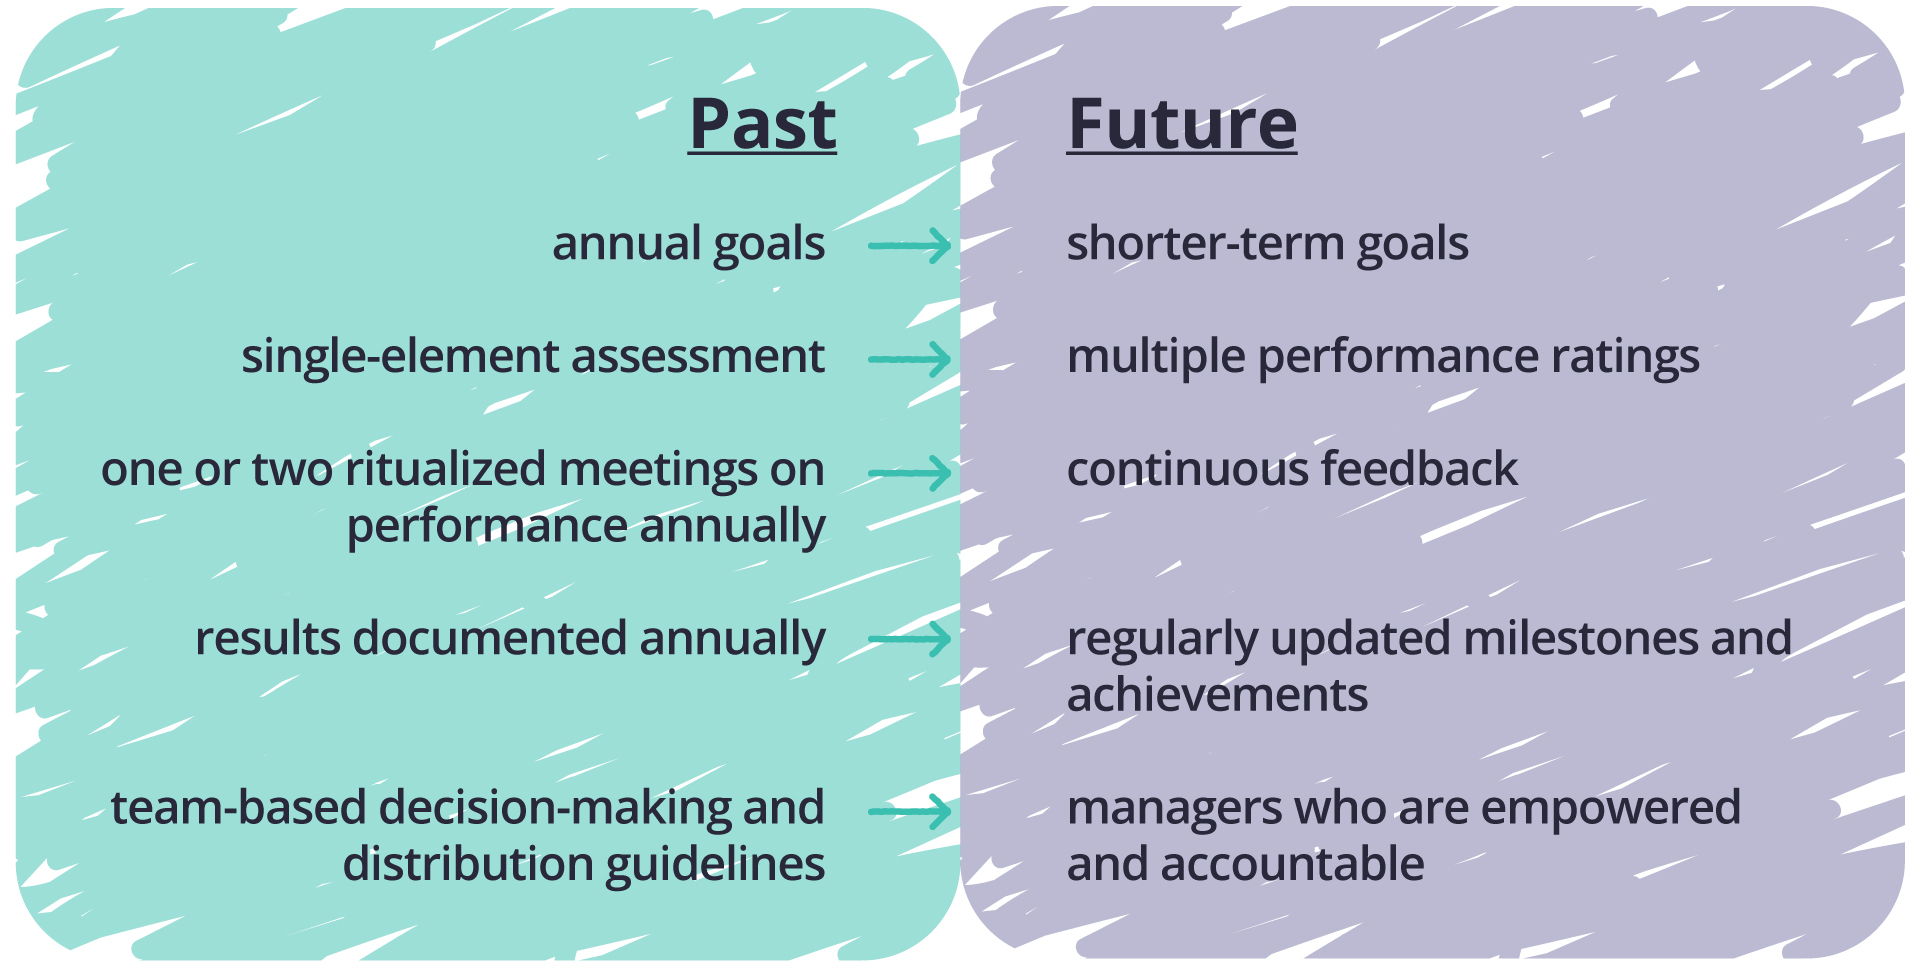 performance management system case study pdf